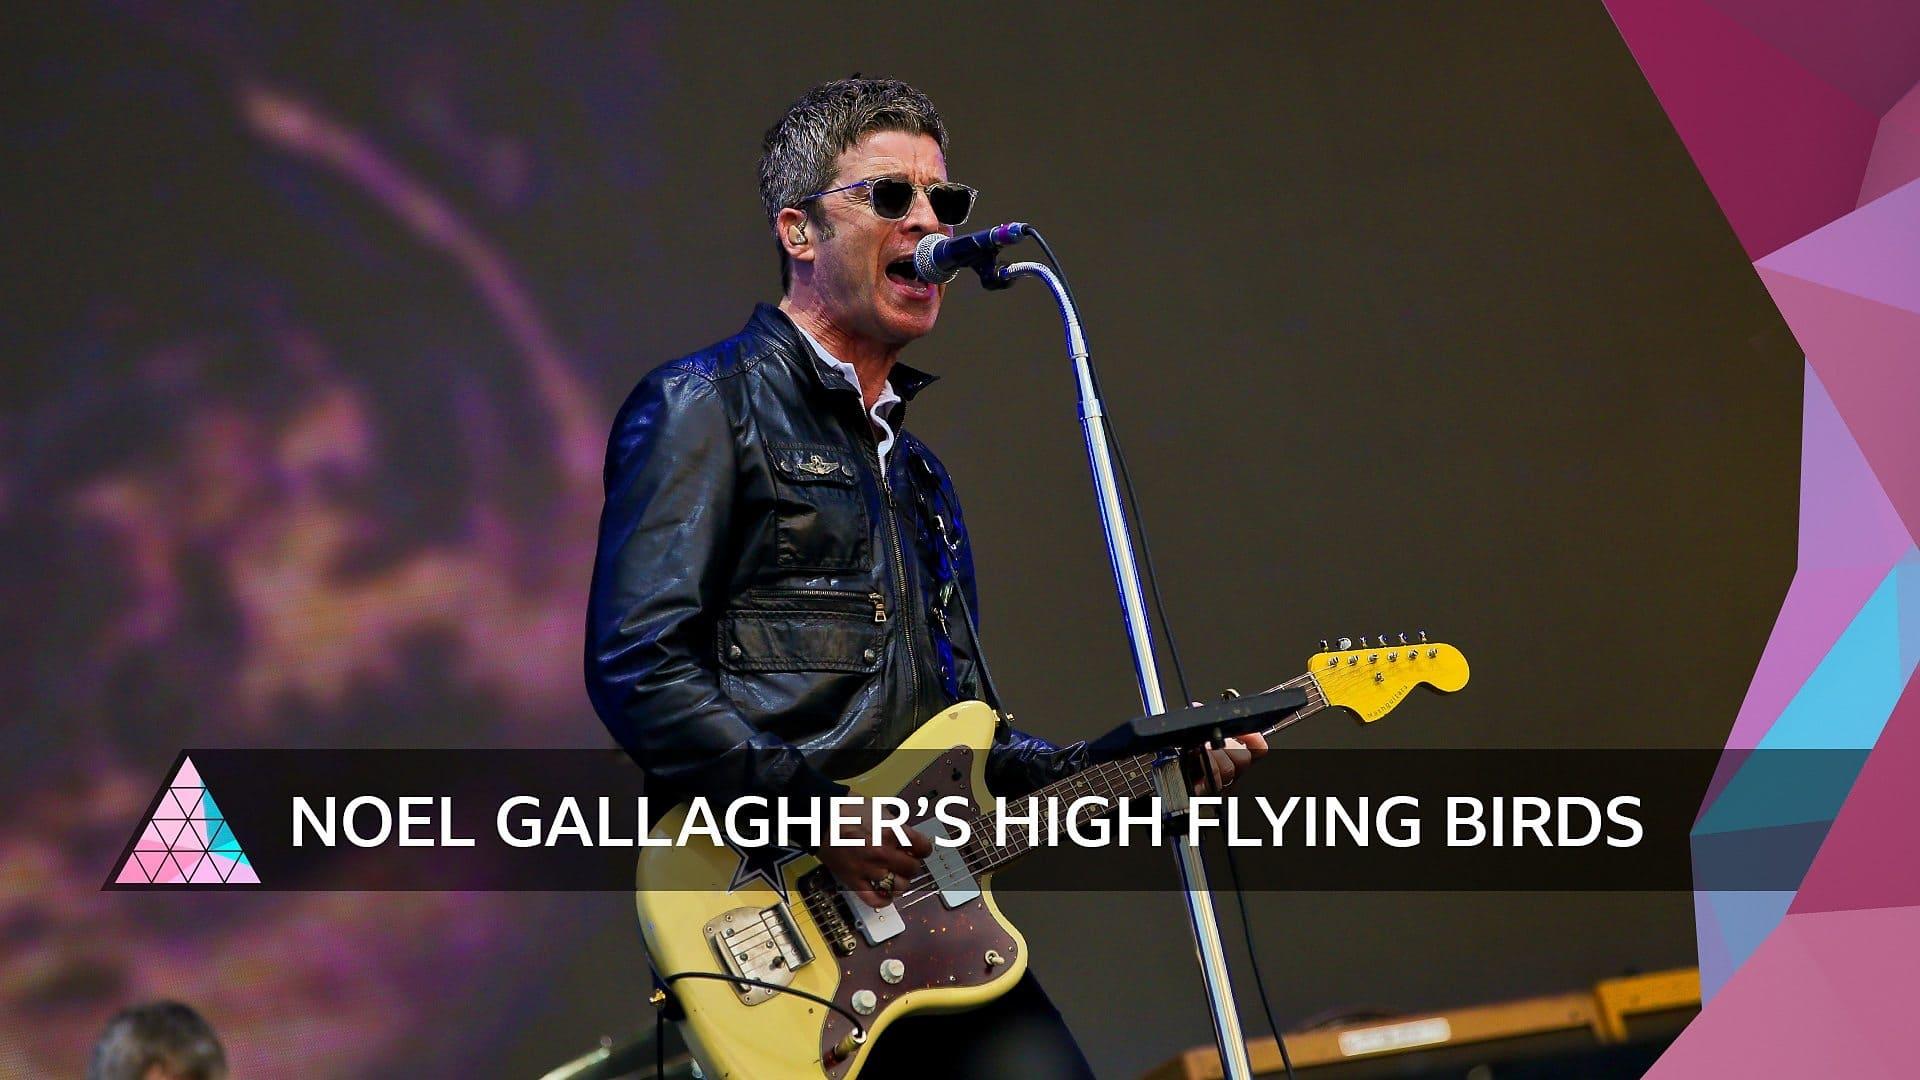 Noel Gallagher’s High Flying Birds at Glastonbury 2022 backdrop